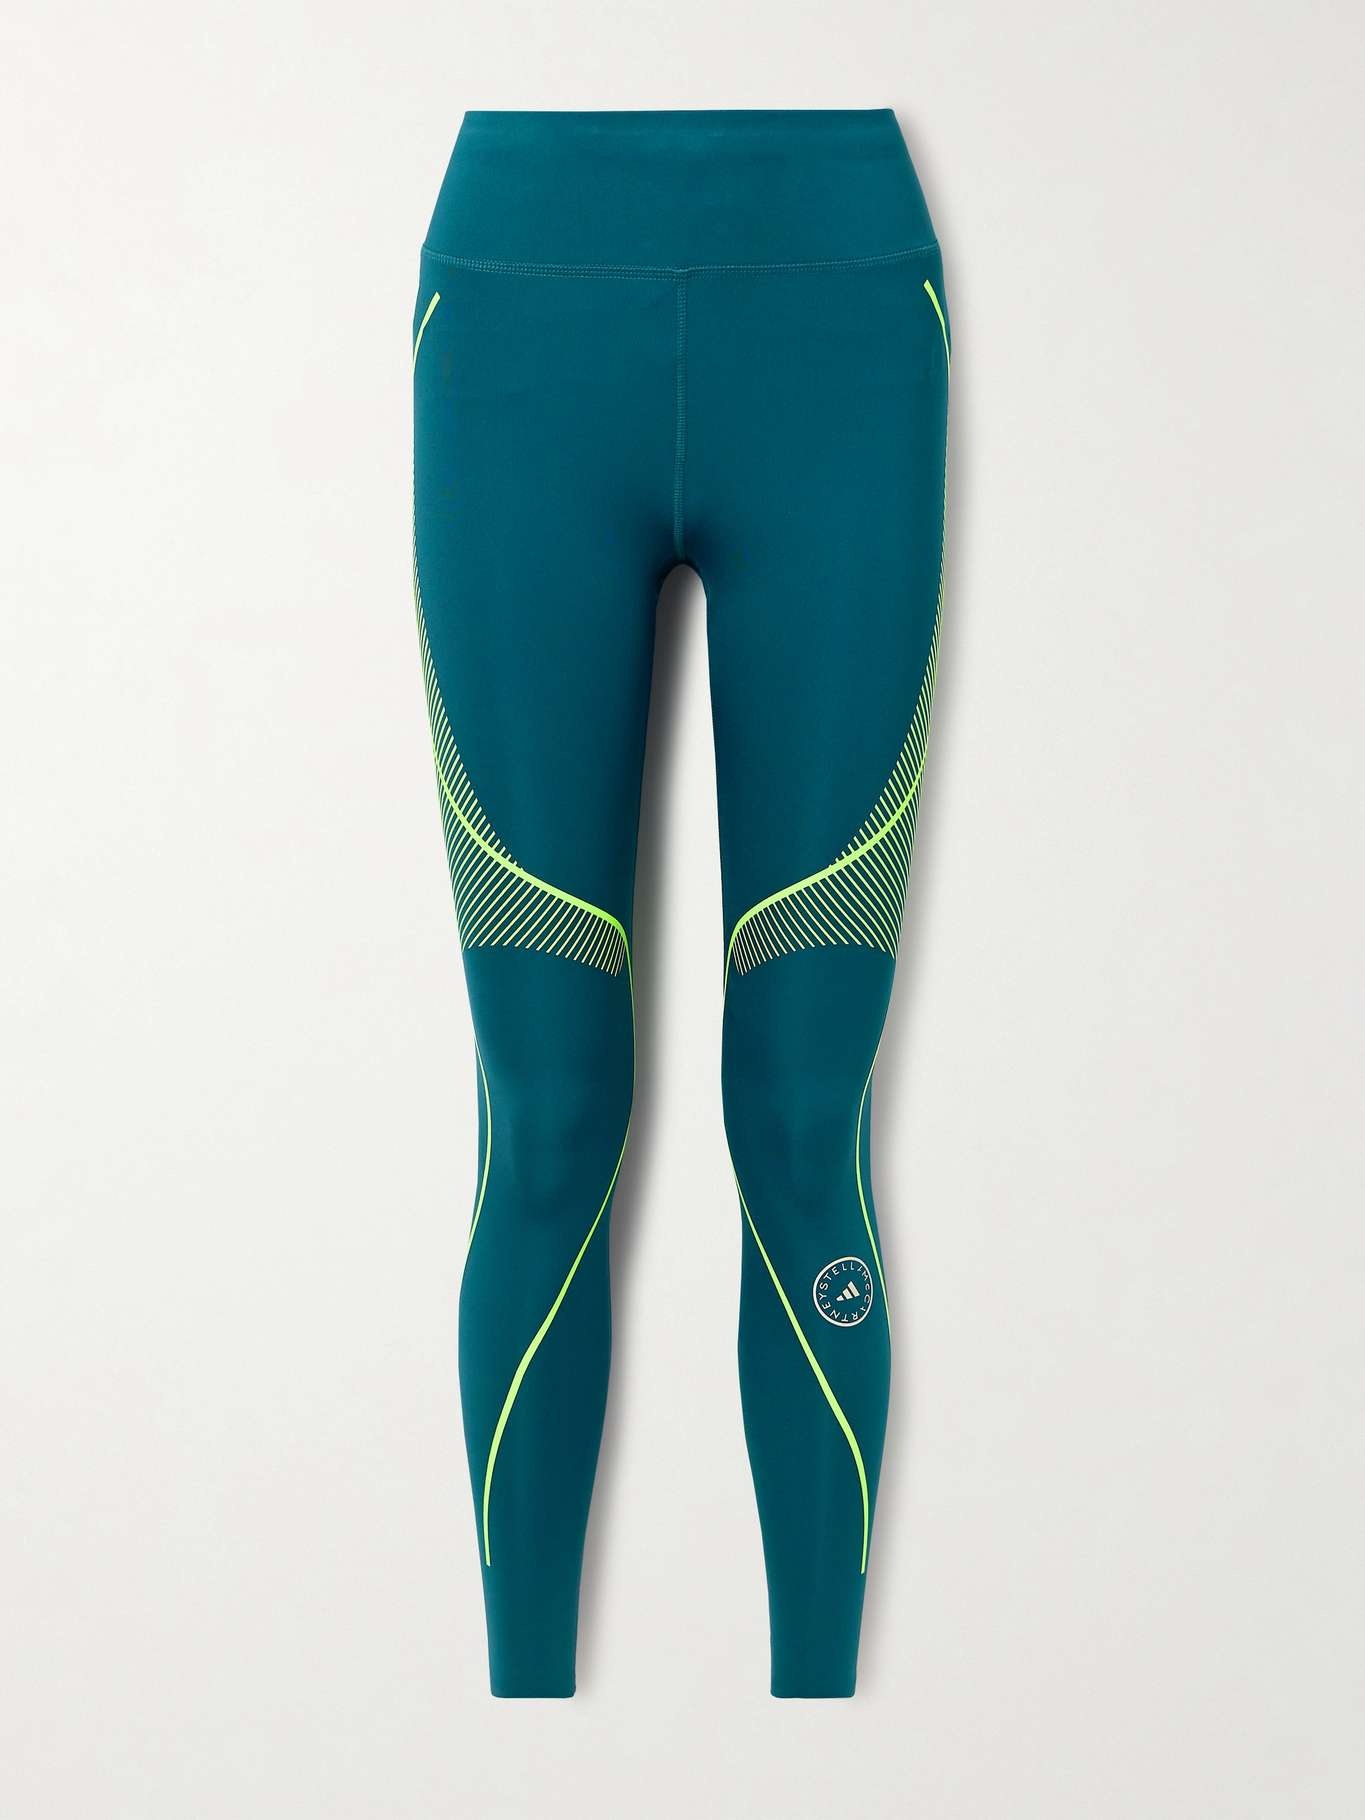 TruePace printed stretch recycled leggings - 1